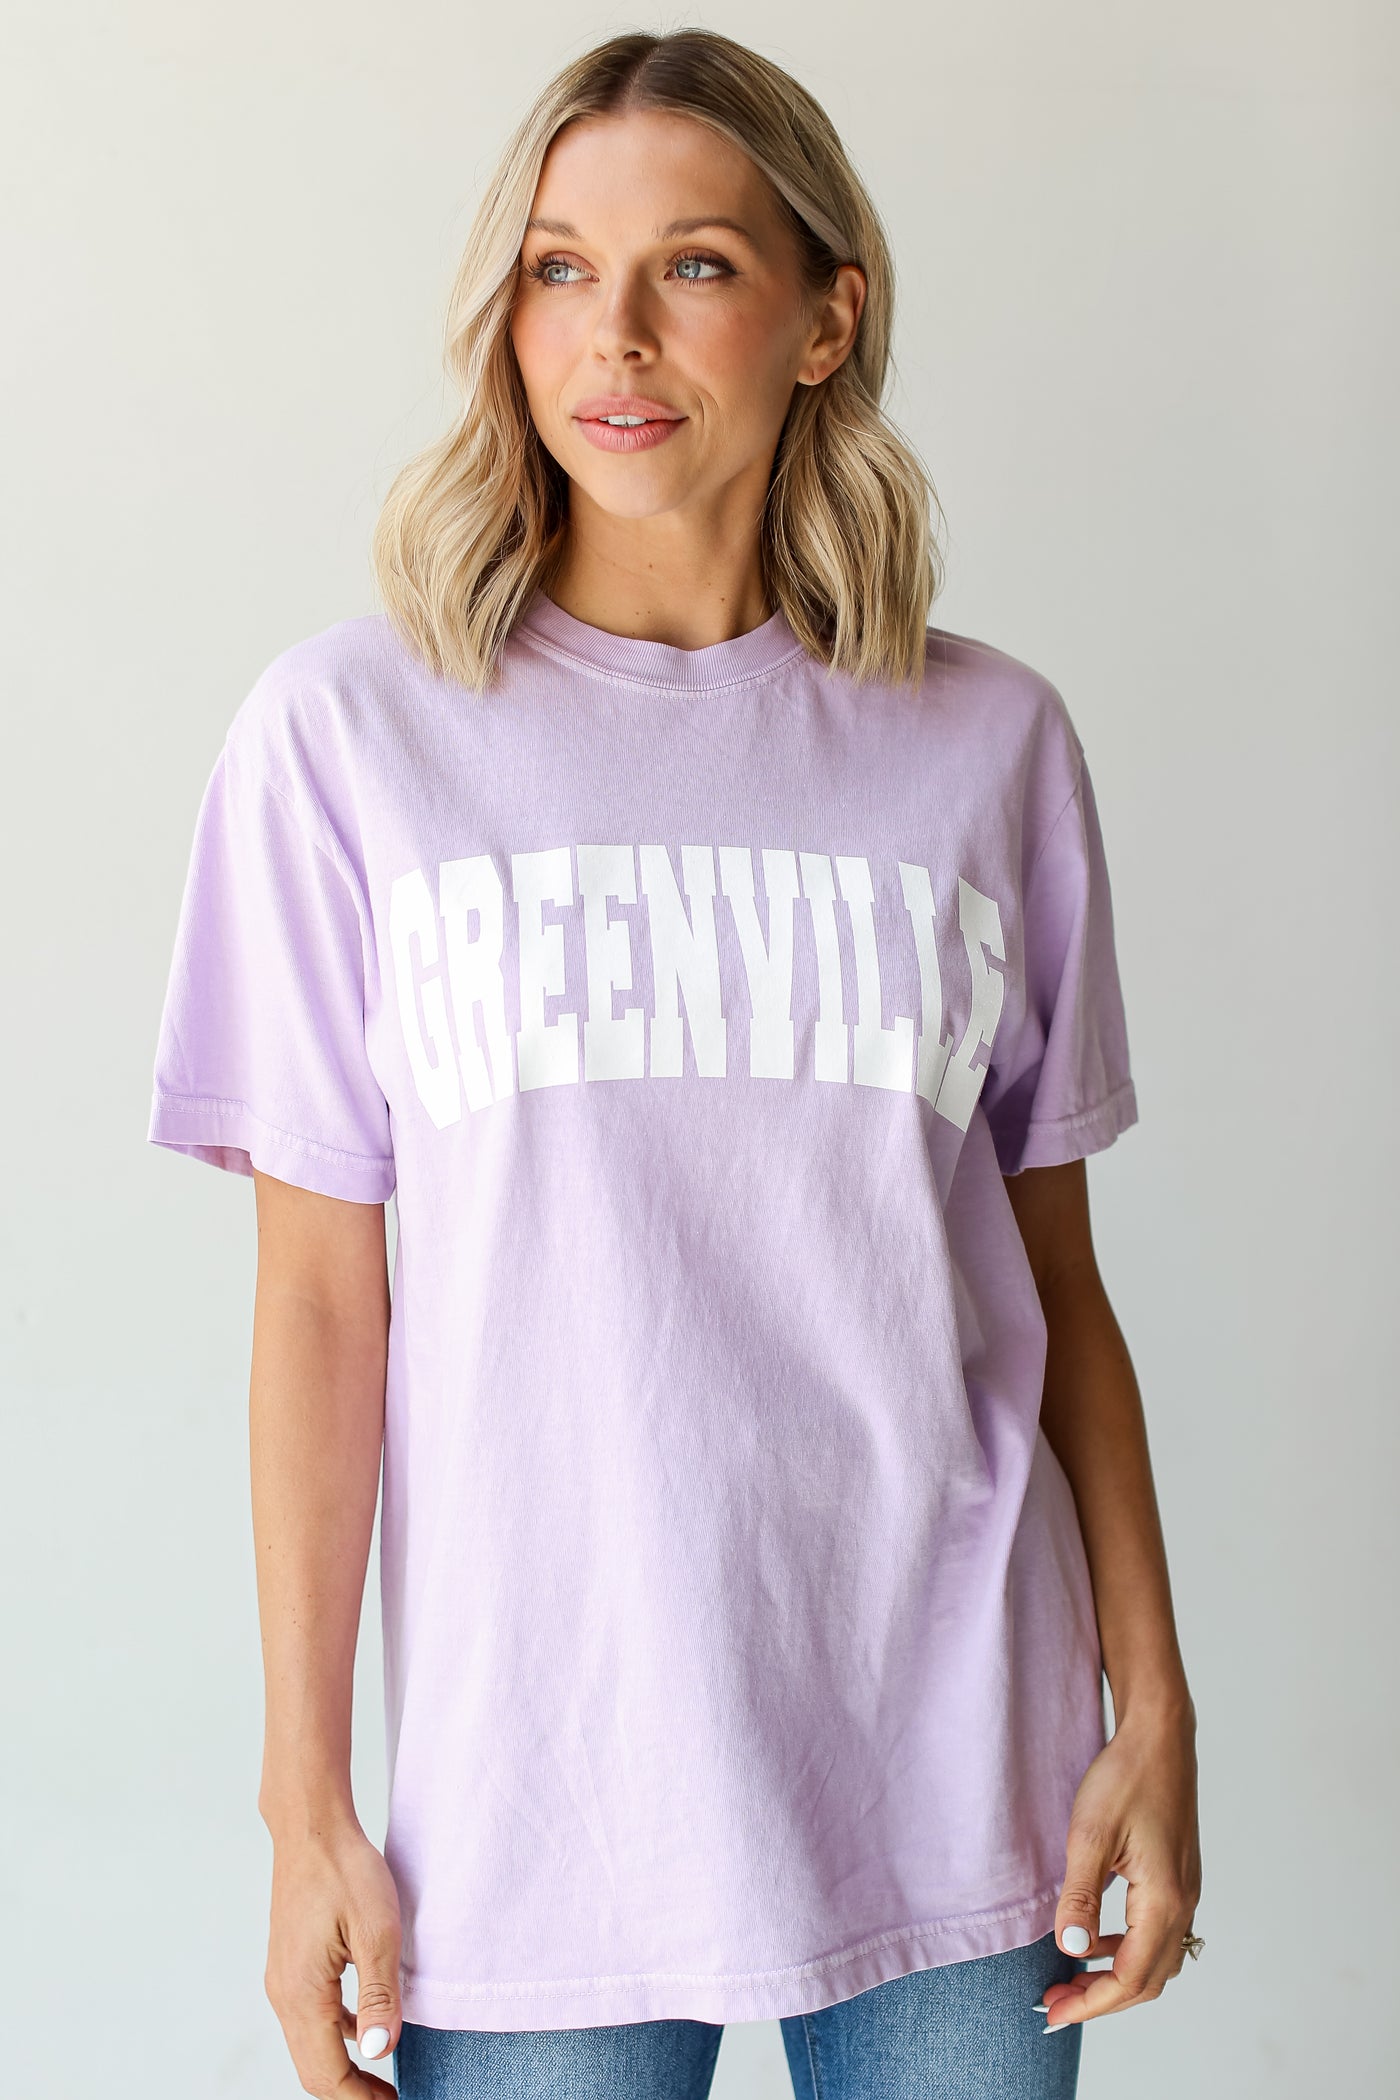 Lavender Greenville Tee on model